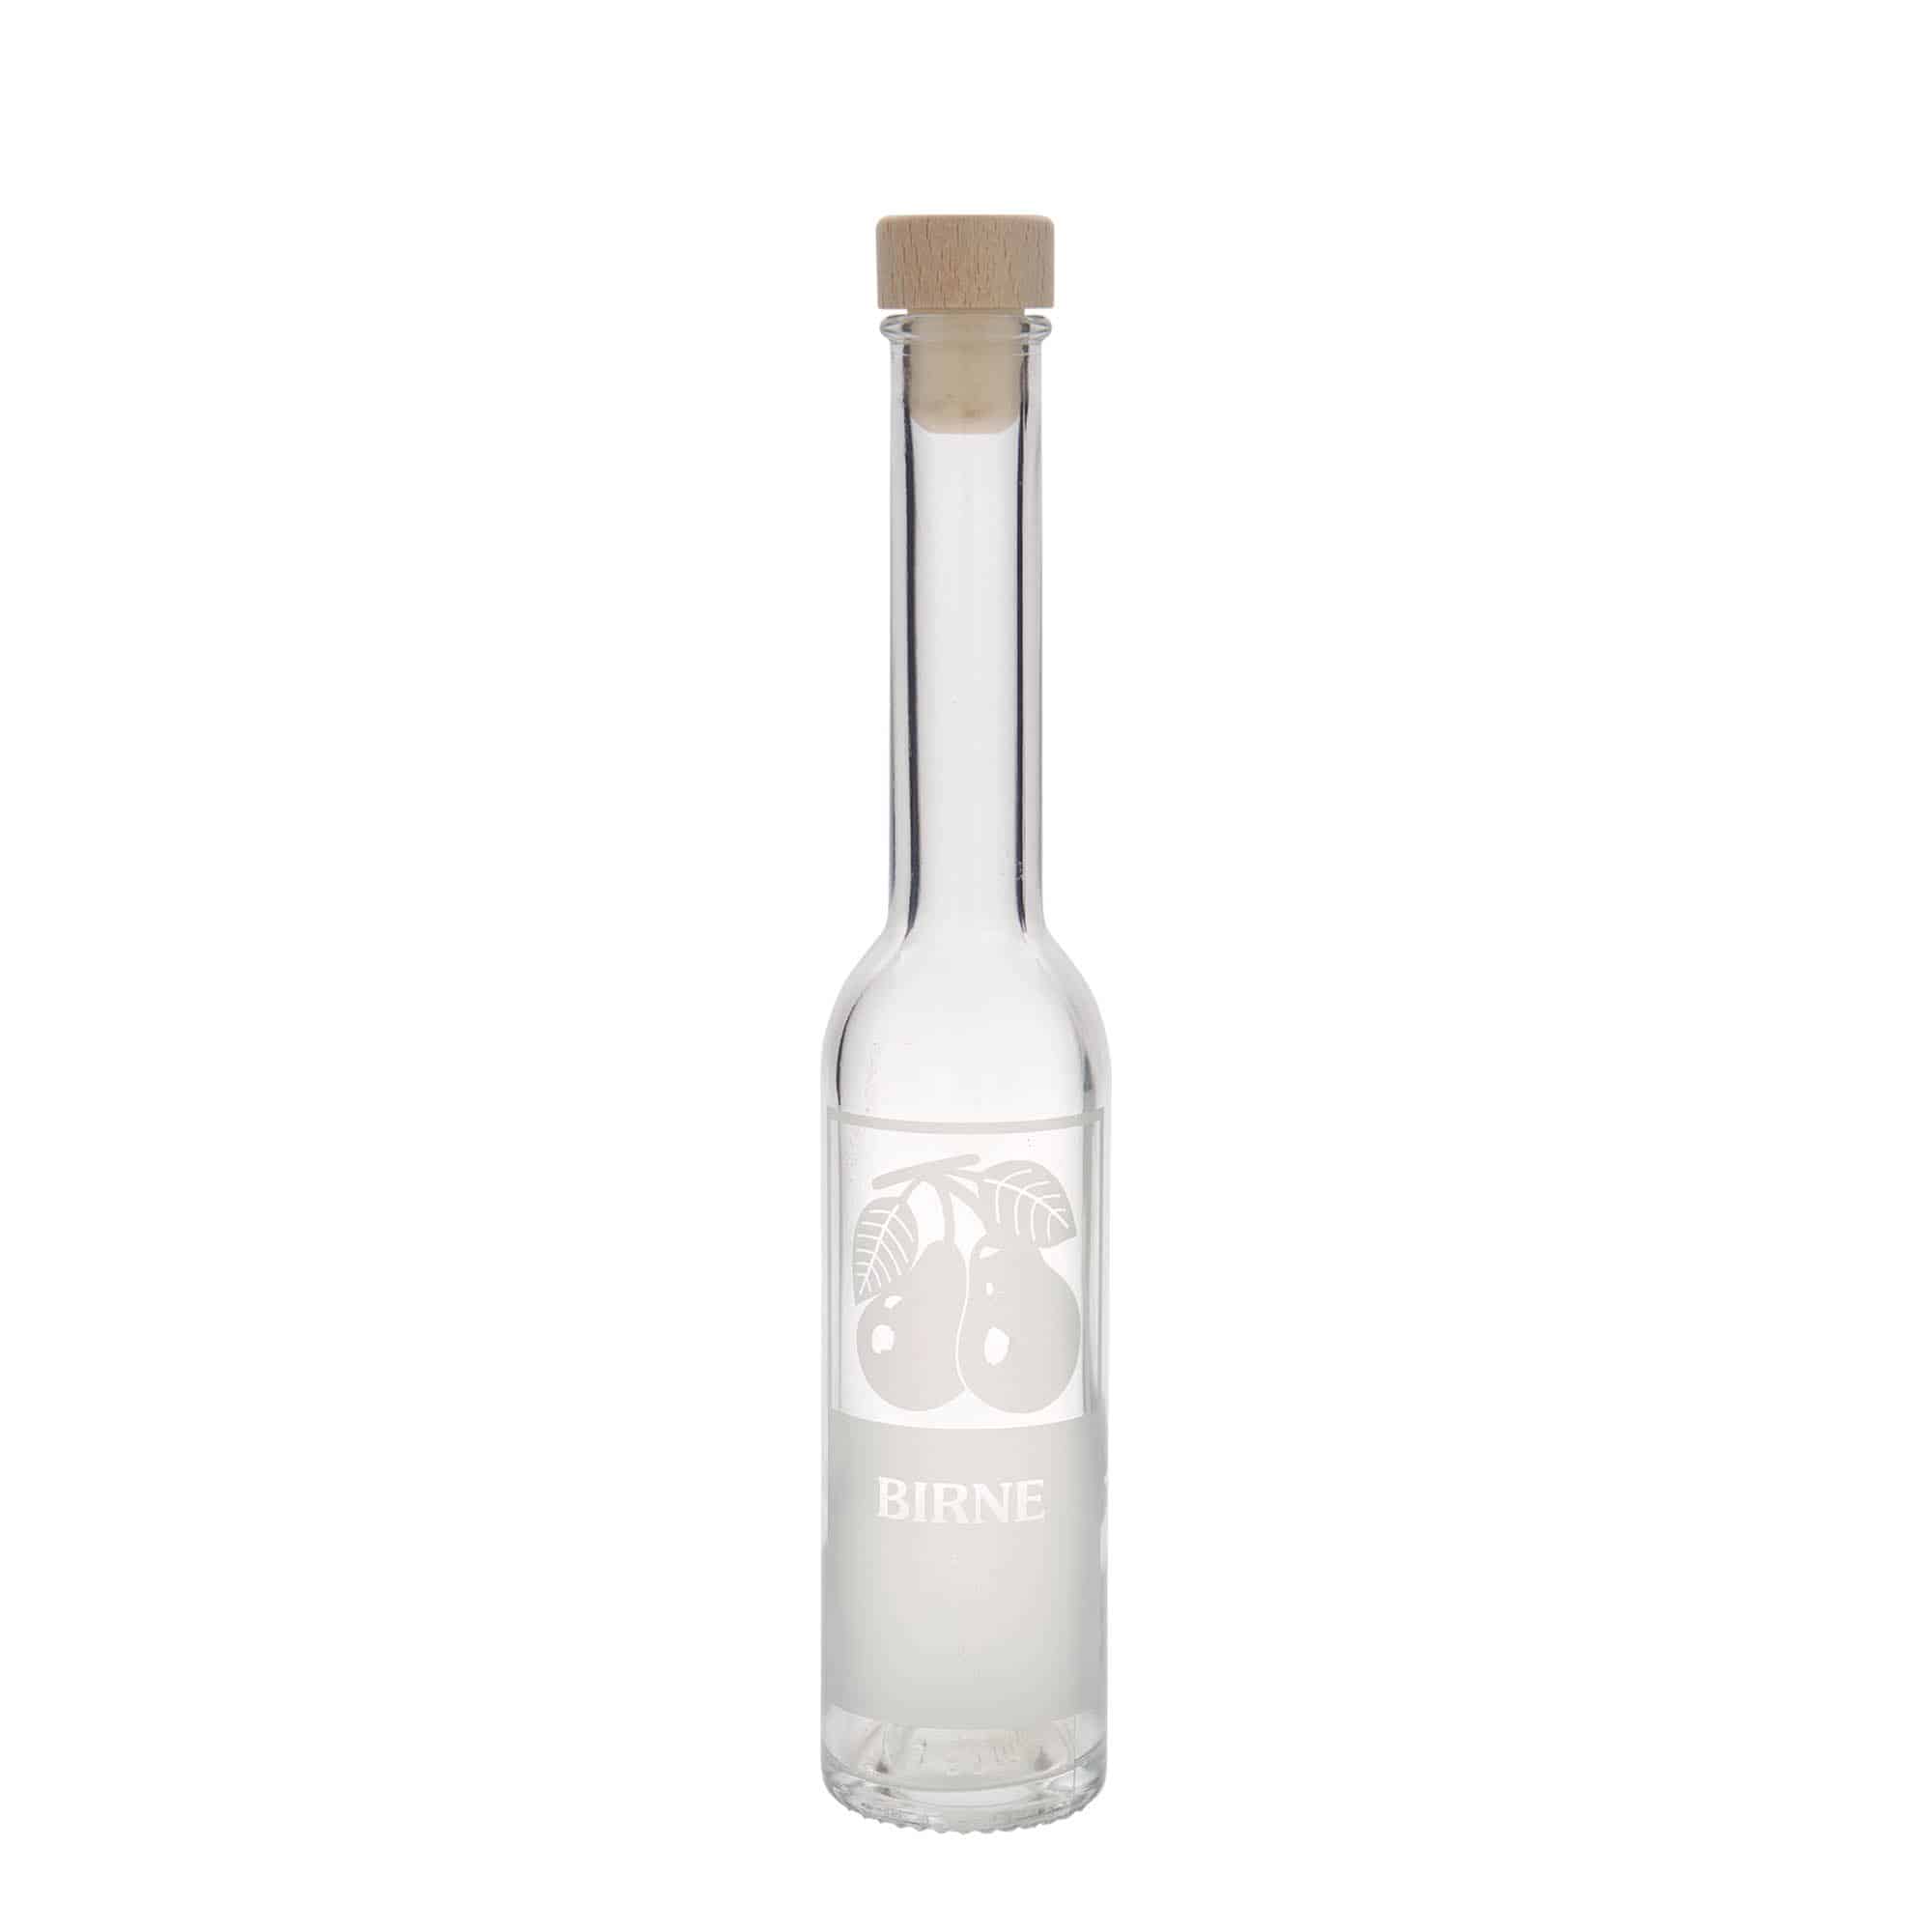 200 ml glass bottle 'Opera', print: pear, closure: cork